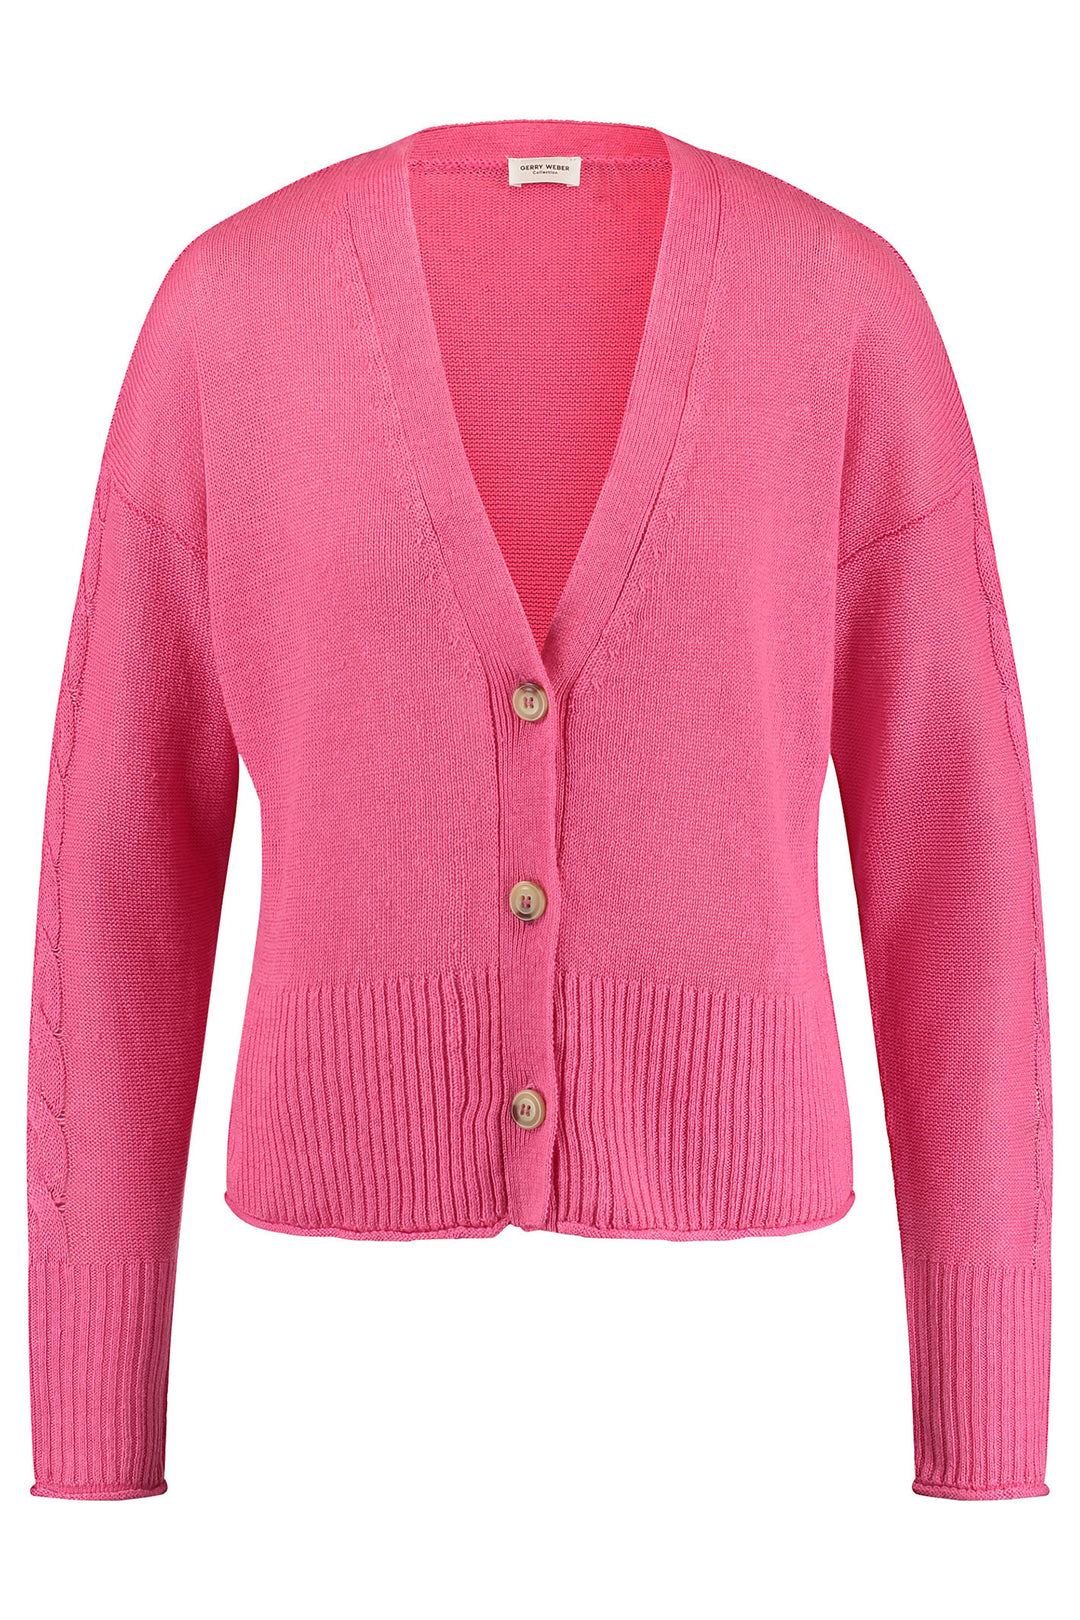 Gerry Weber 330038-35724 30913 Pink Linen Blend Cardigan - Experience Boutique